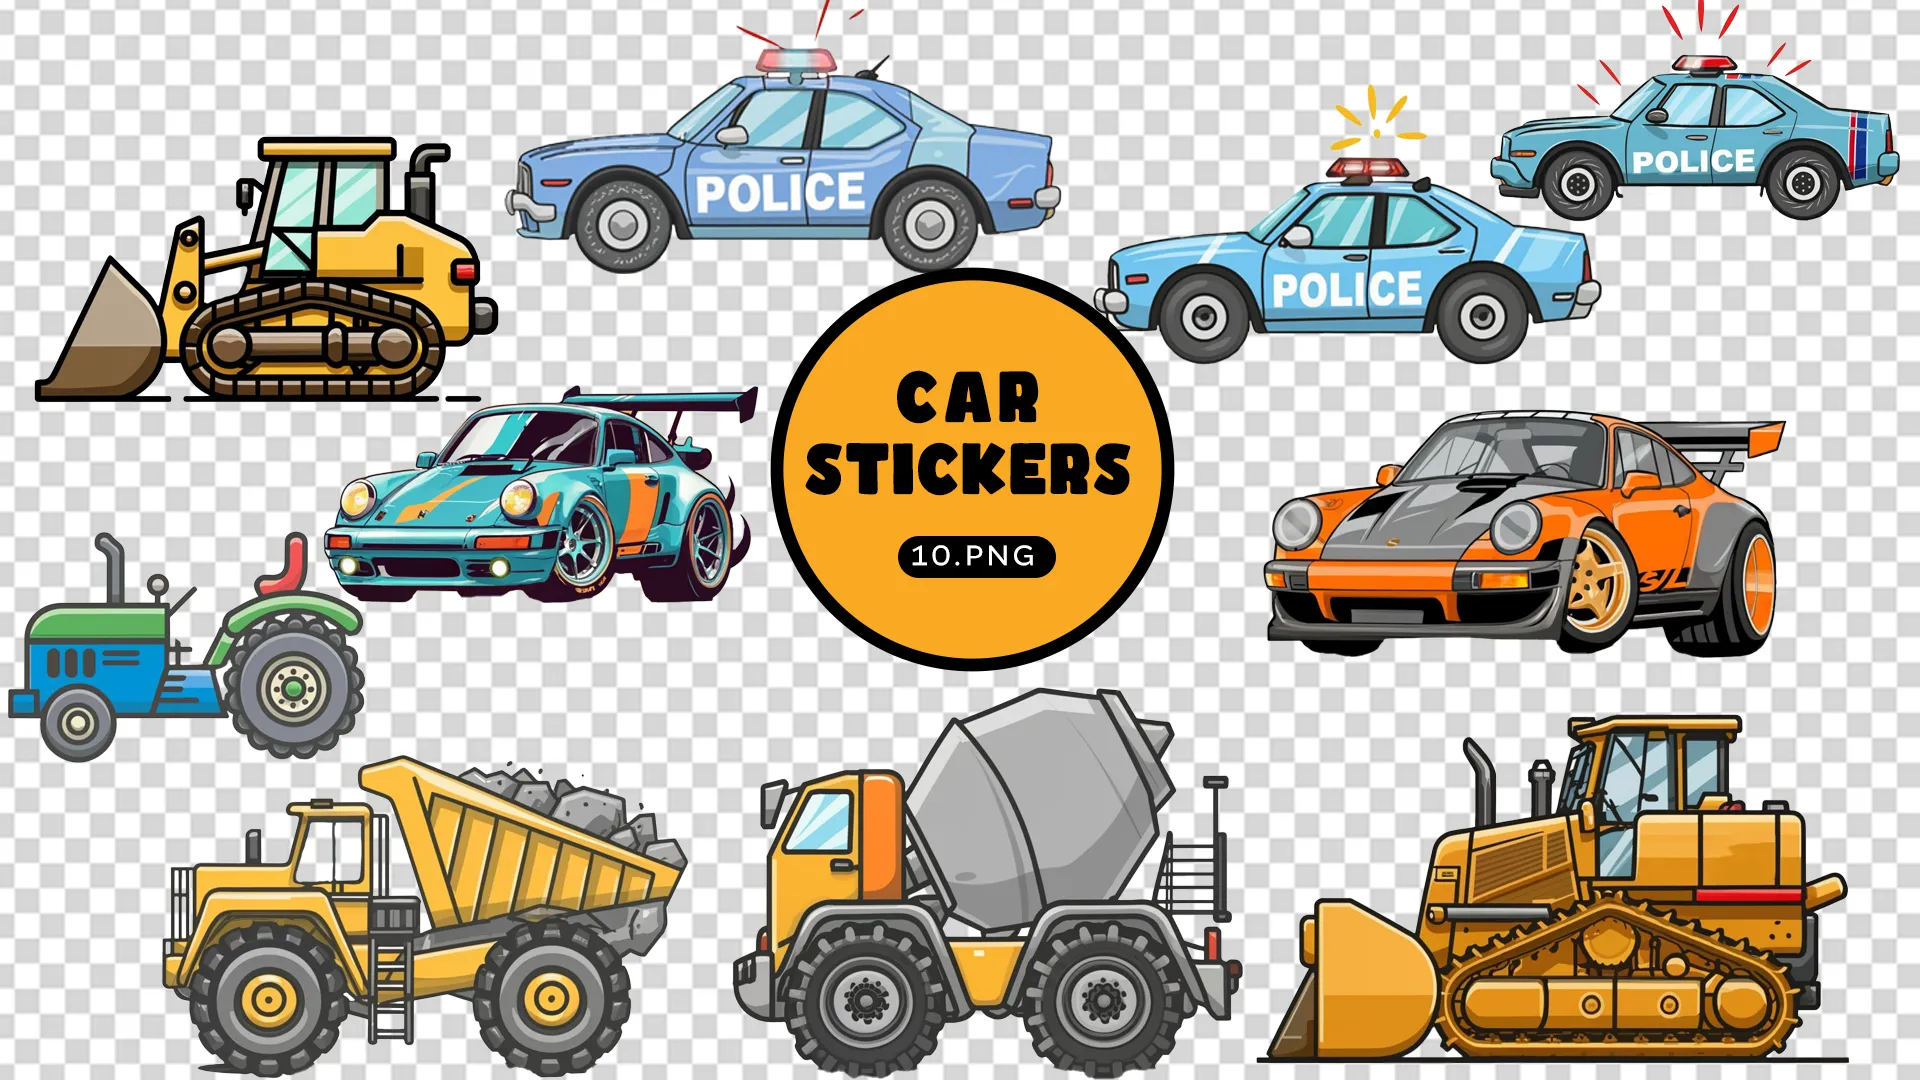 Highway Heroes Car Stickers Emblem Array image